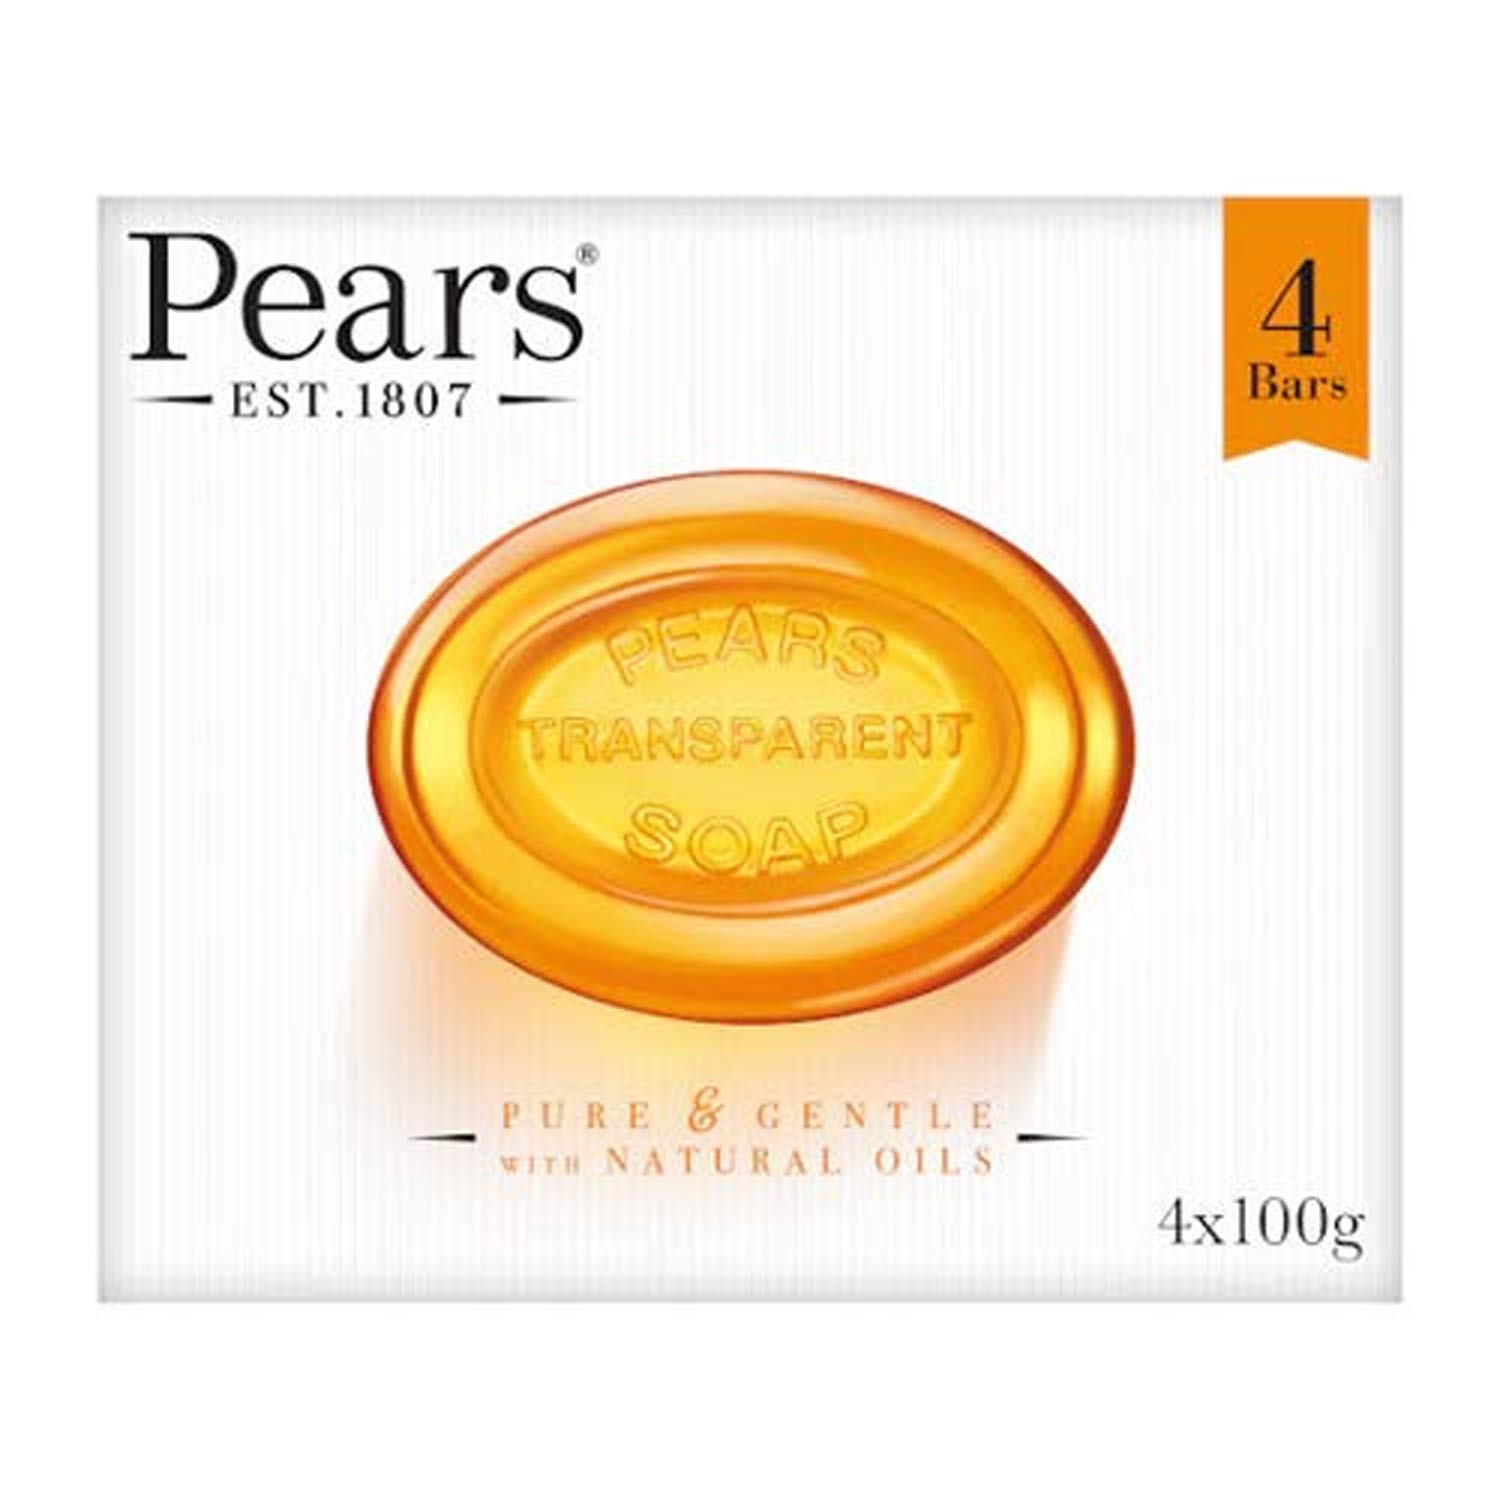 Pears Transparent Soap - 4 x 100g